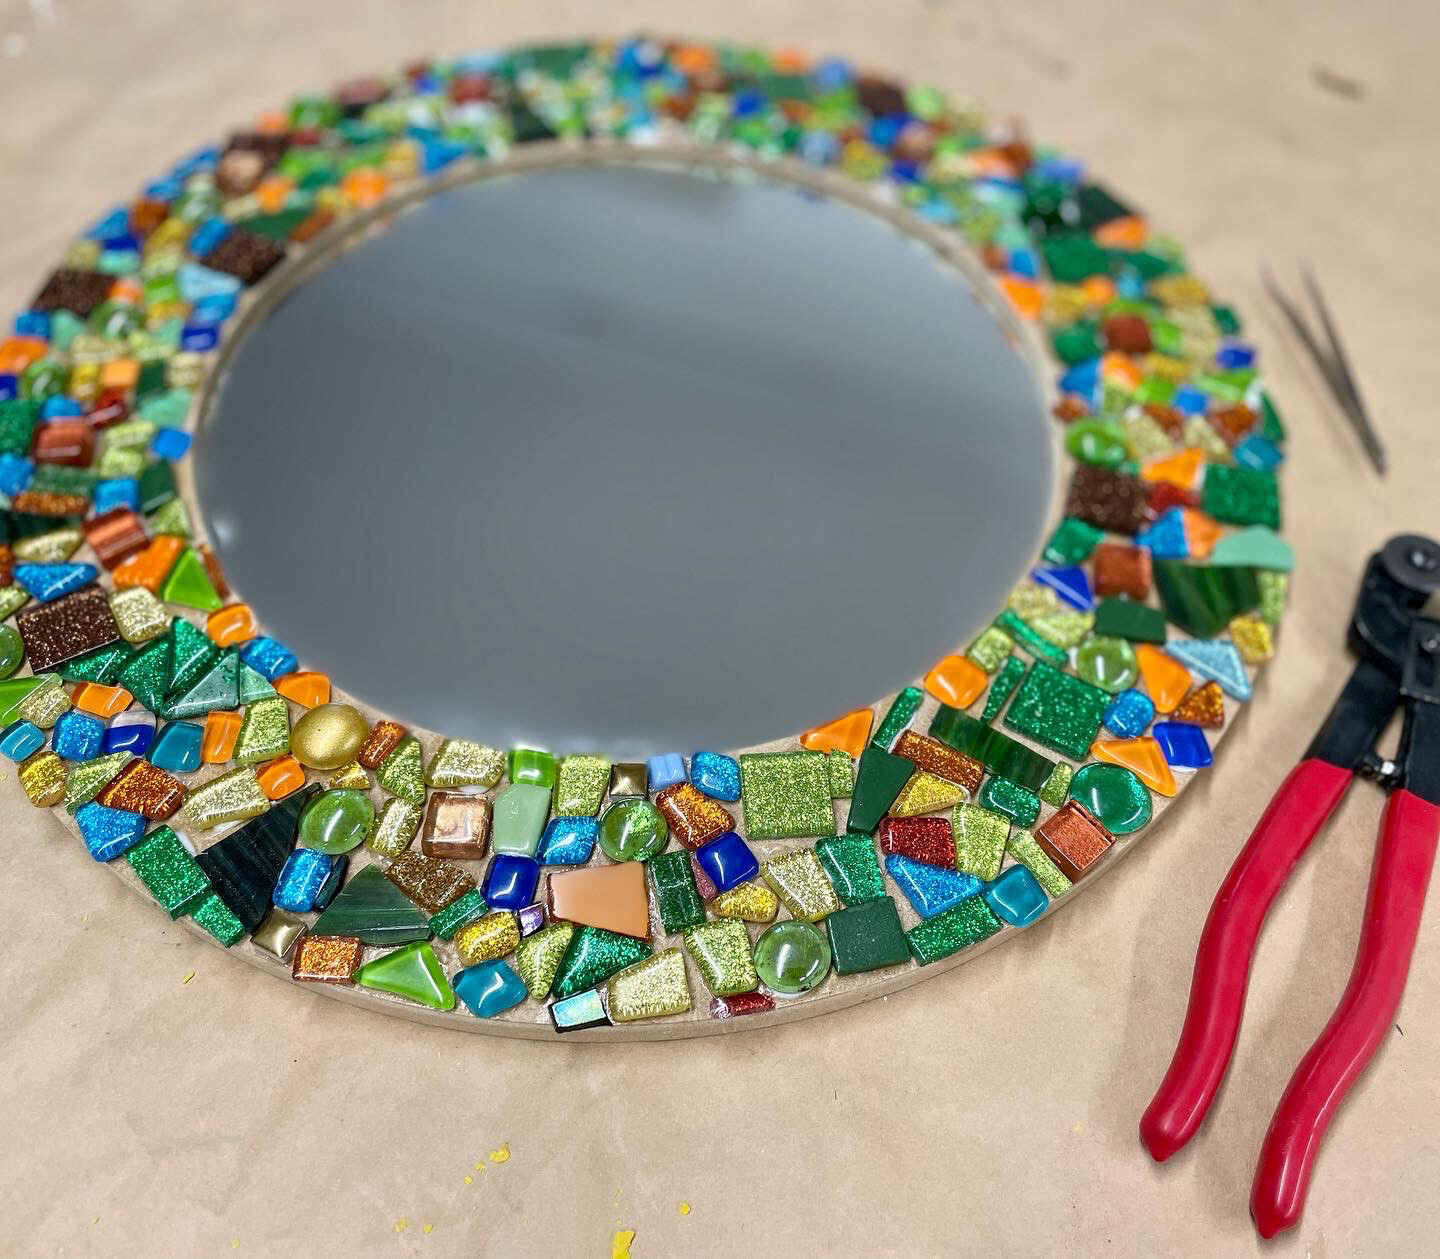 Mosaic Mirror Workshop - Thursday 23rd June 10:30am-1pm